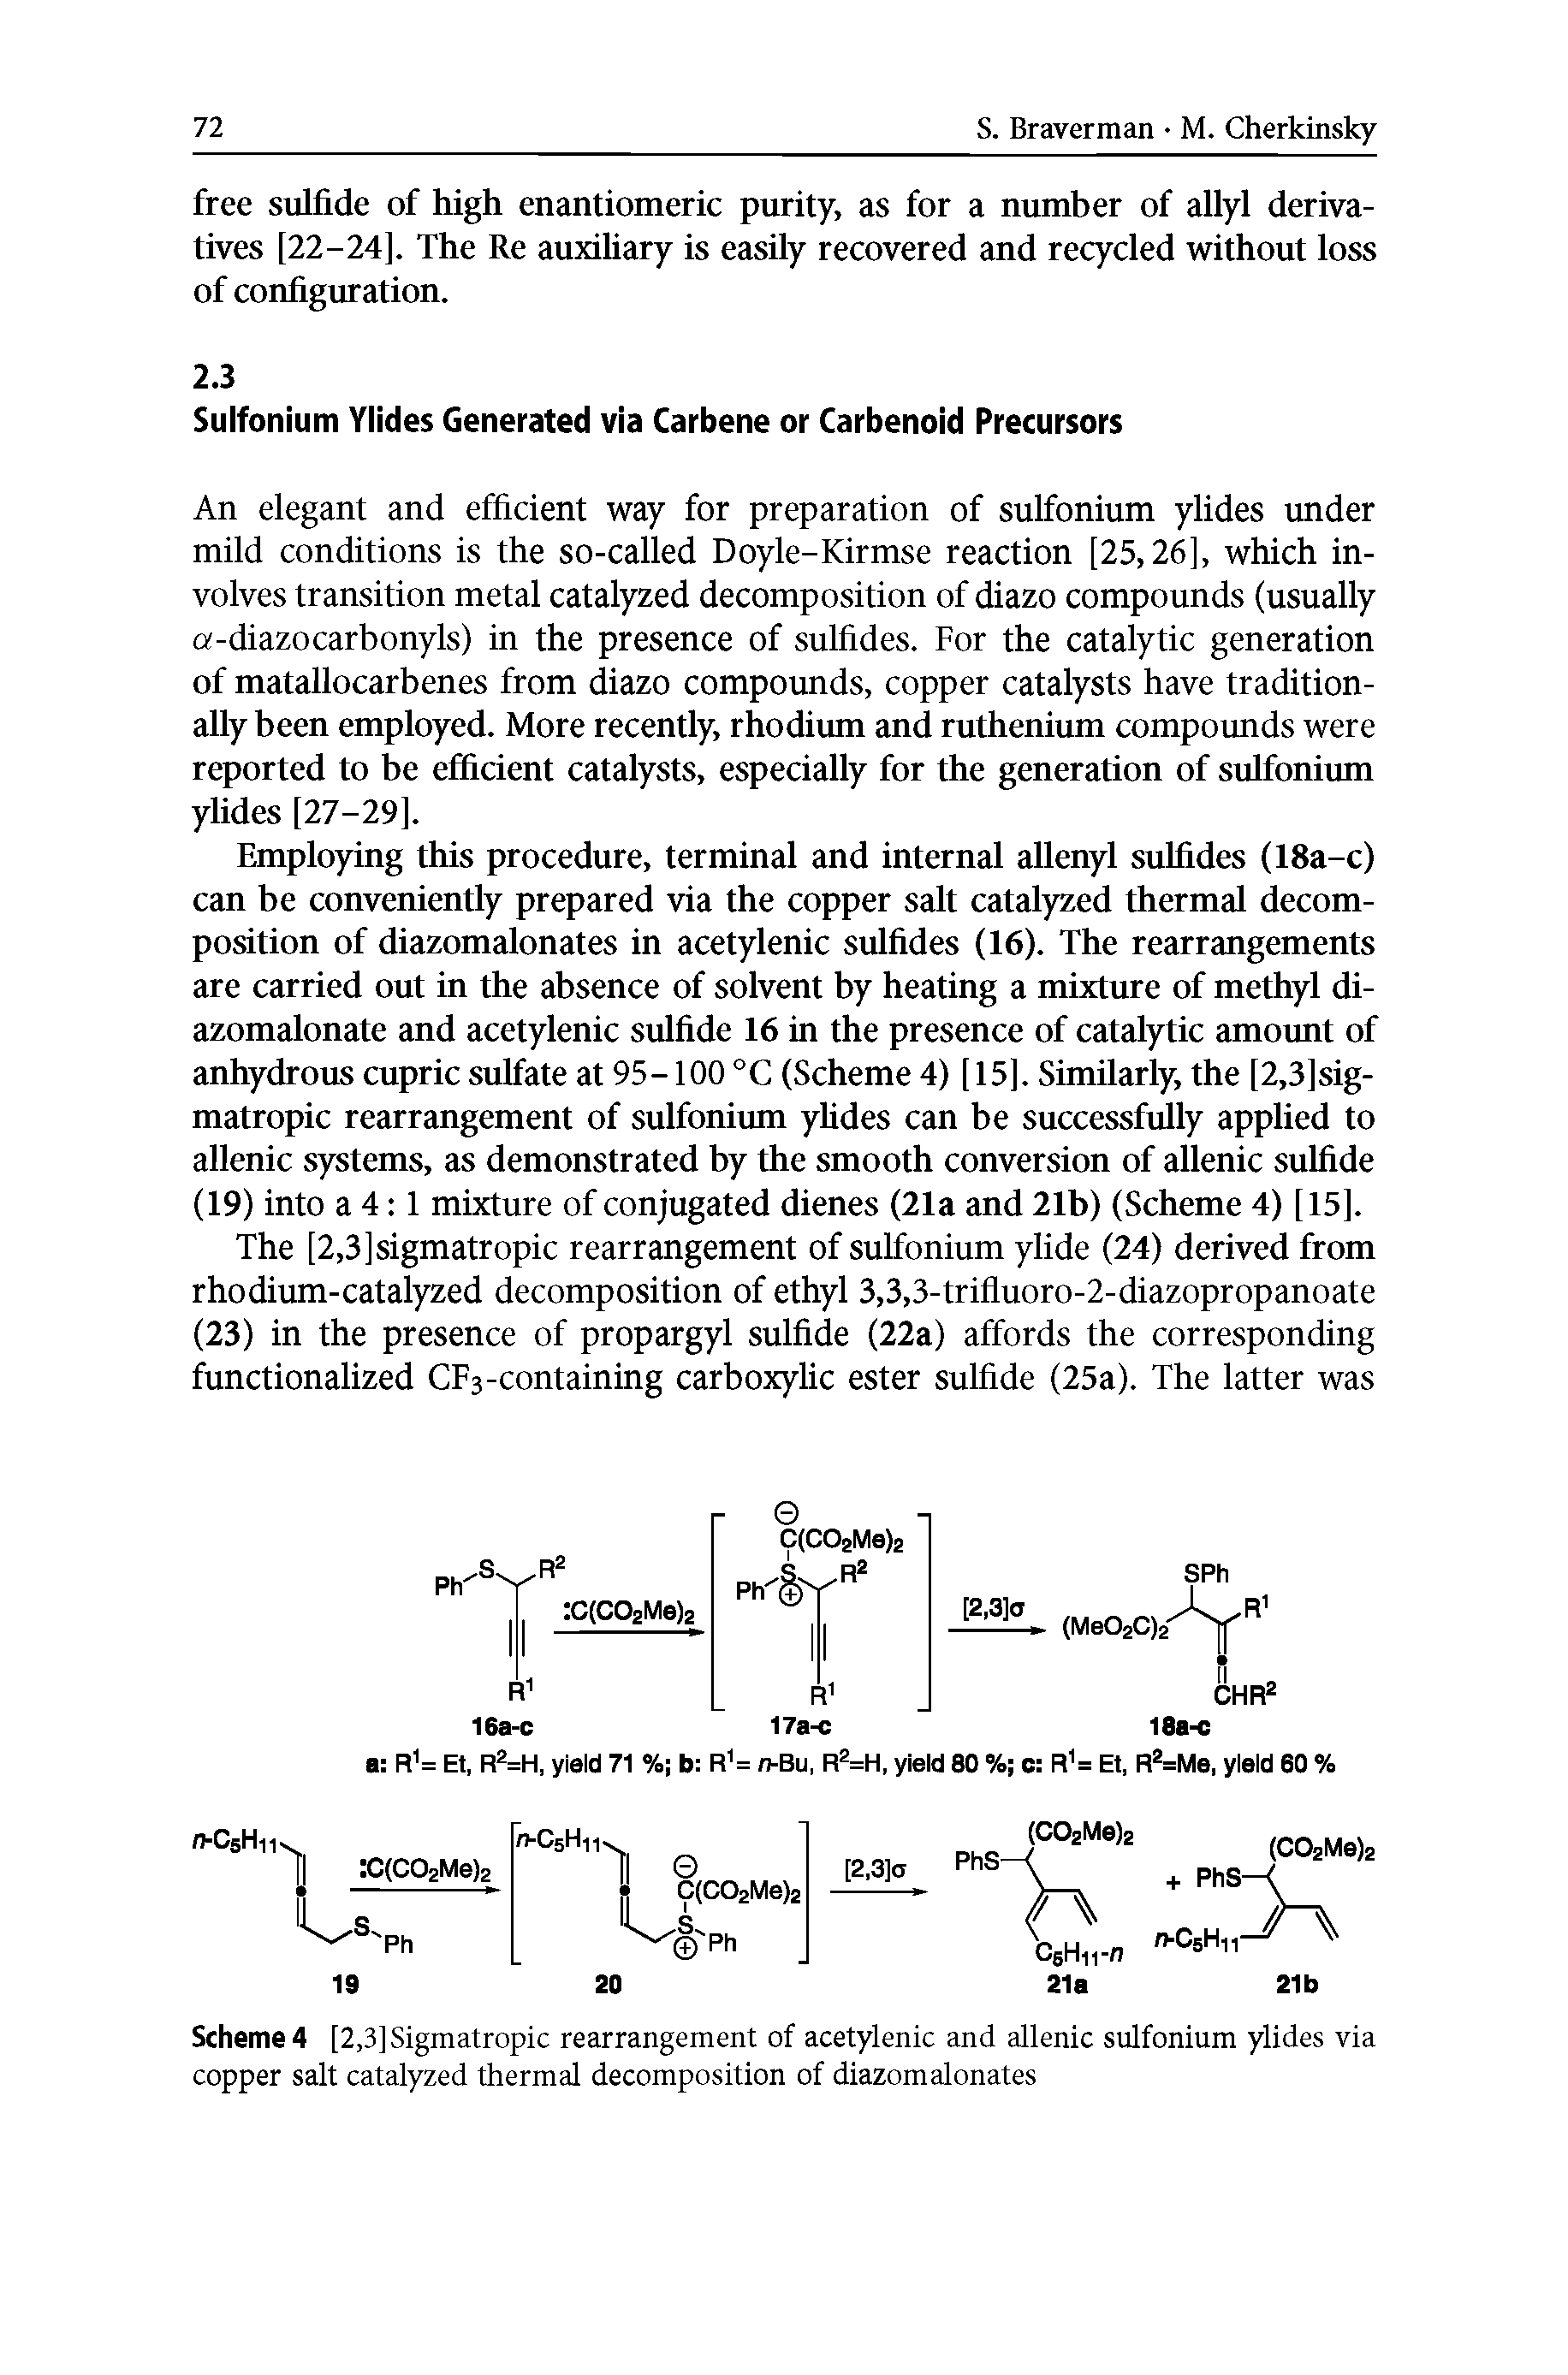 Scheme 4 [2,3]Sigmatropic rearrangement of acetylenic and allenic sulfonium ylides via copper salt catalyzed thermal decomposition of diazomalonates...